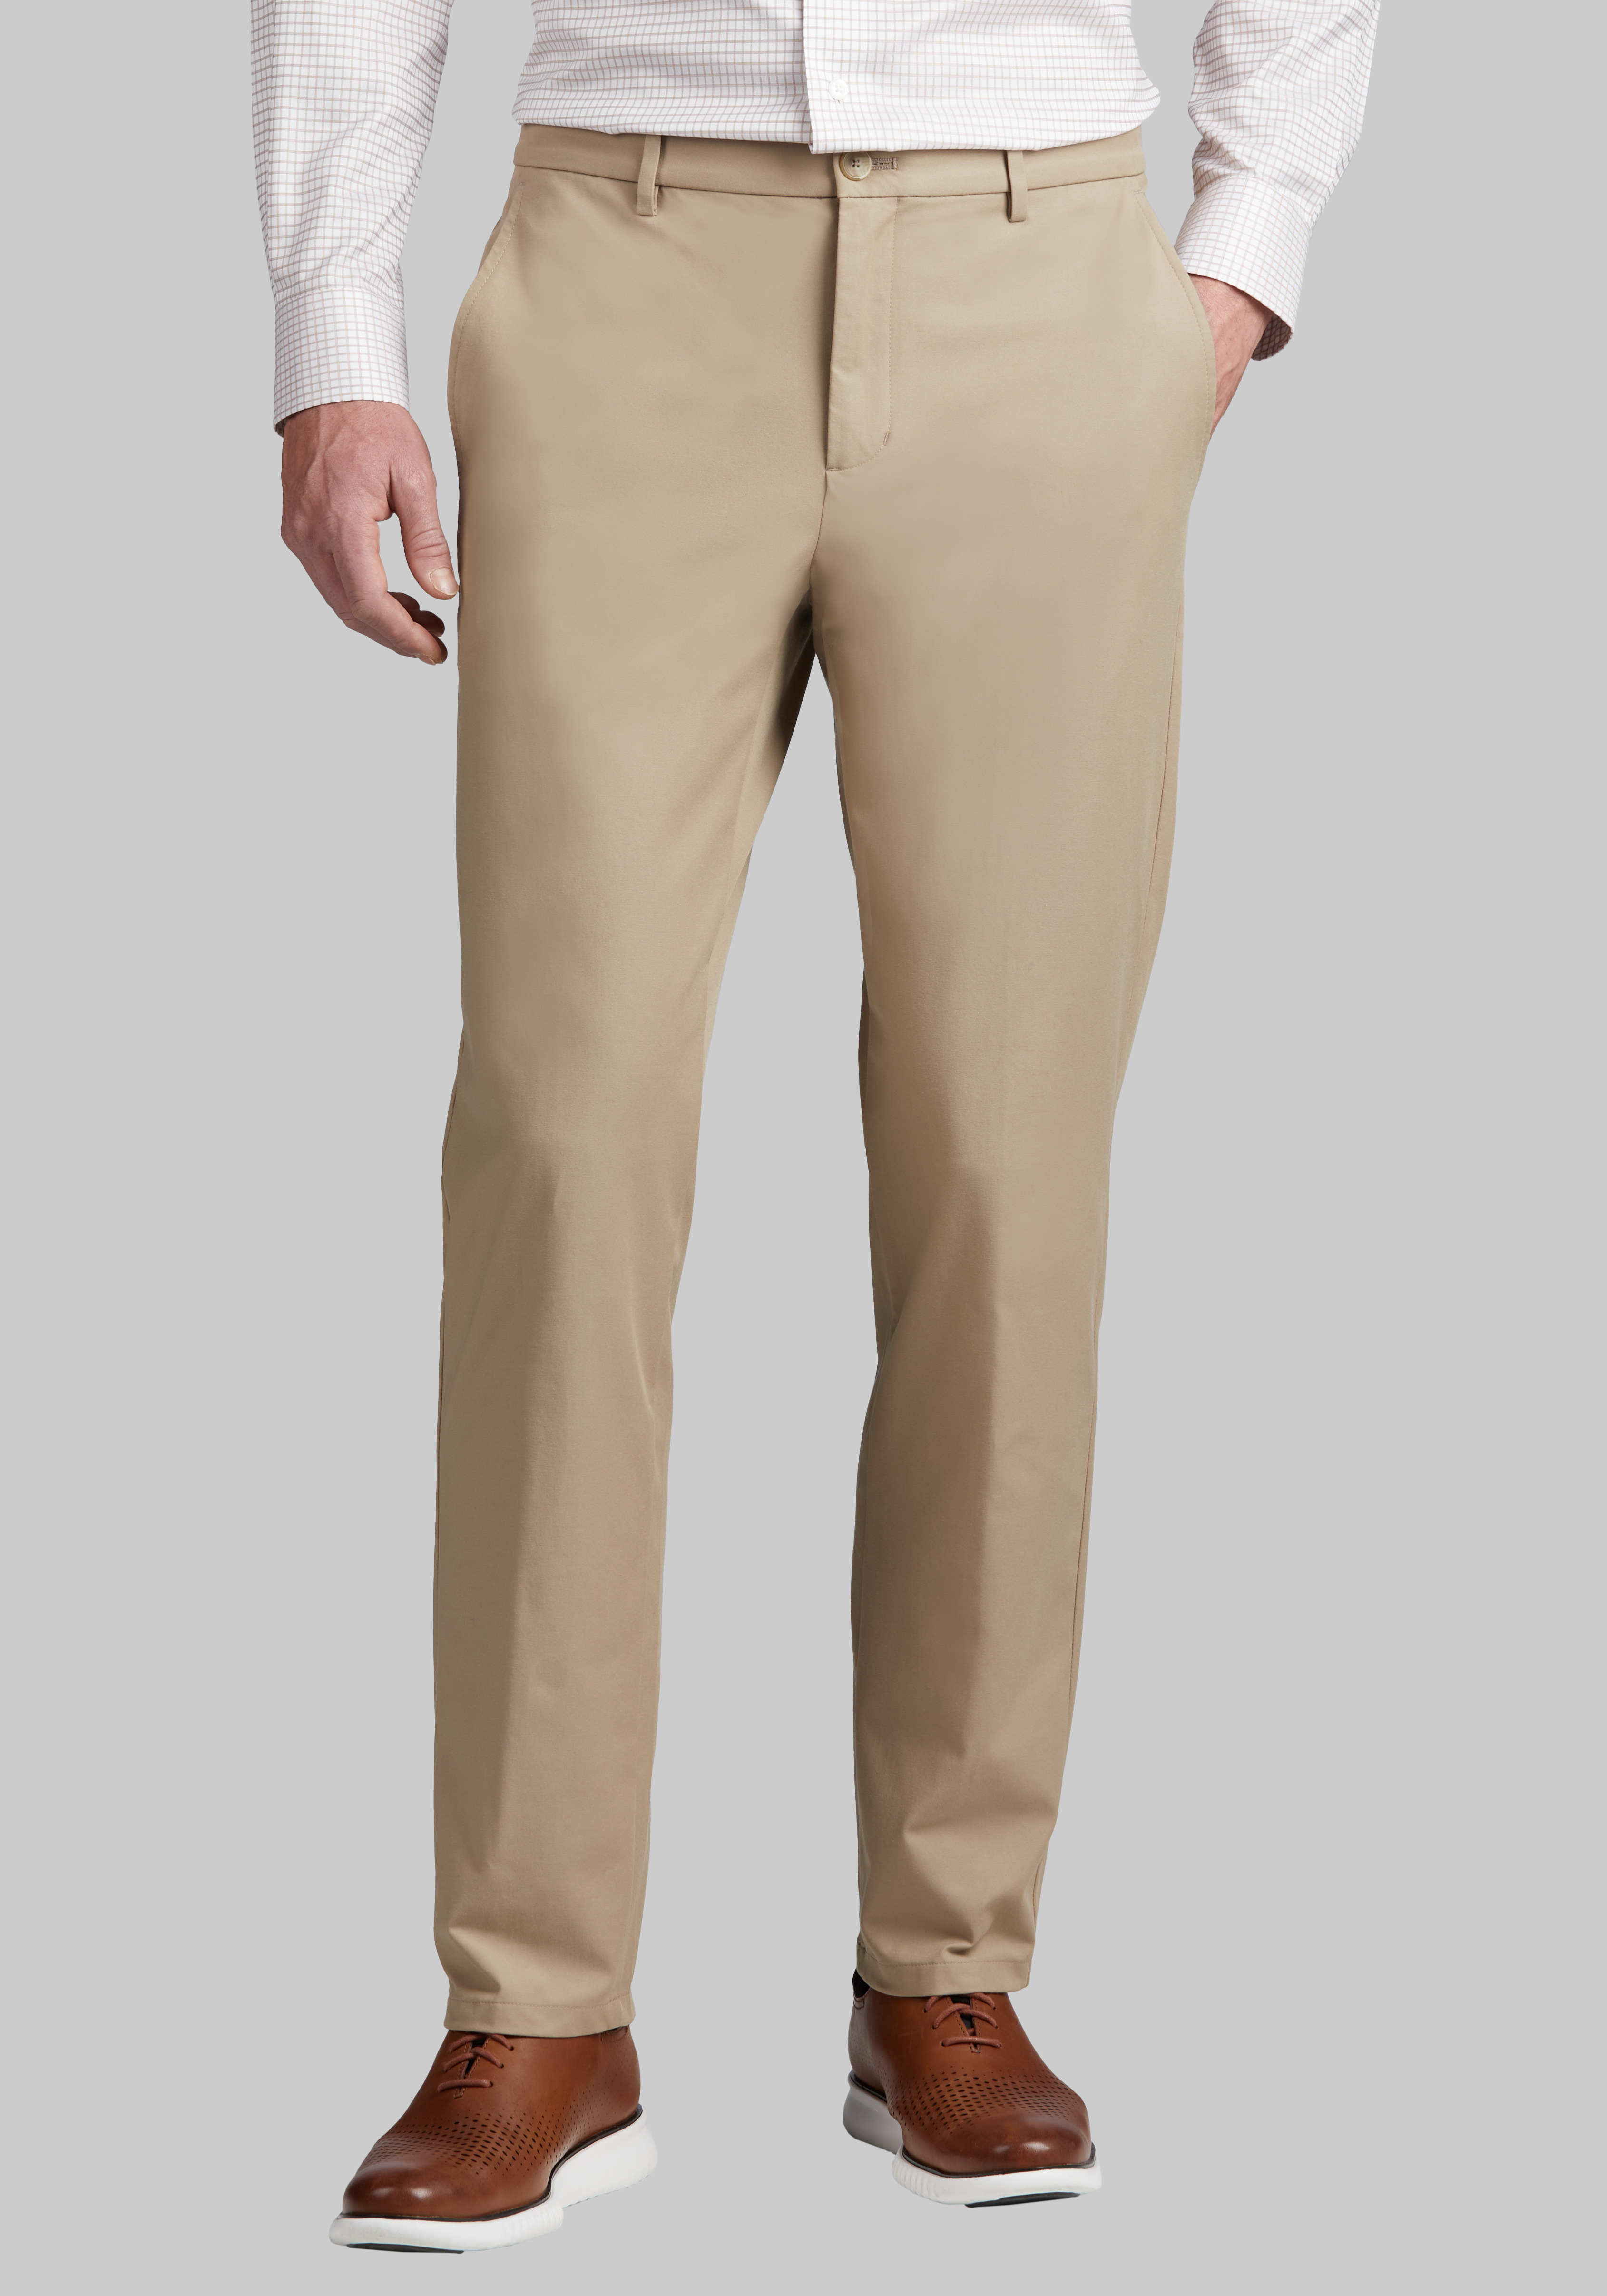 Khaki Brown Leisure Suit - Hangrr